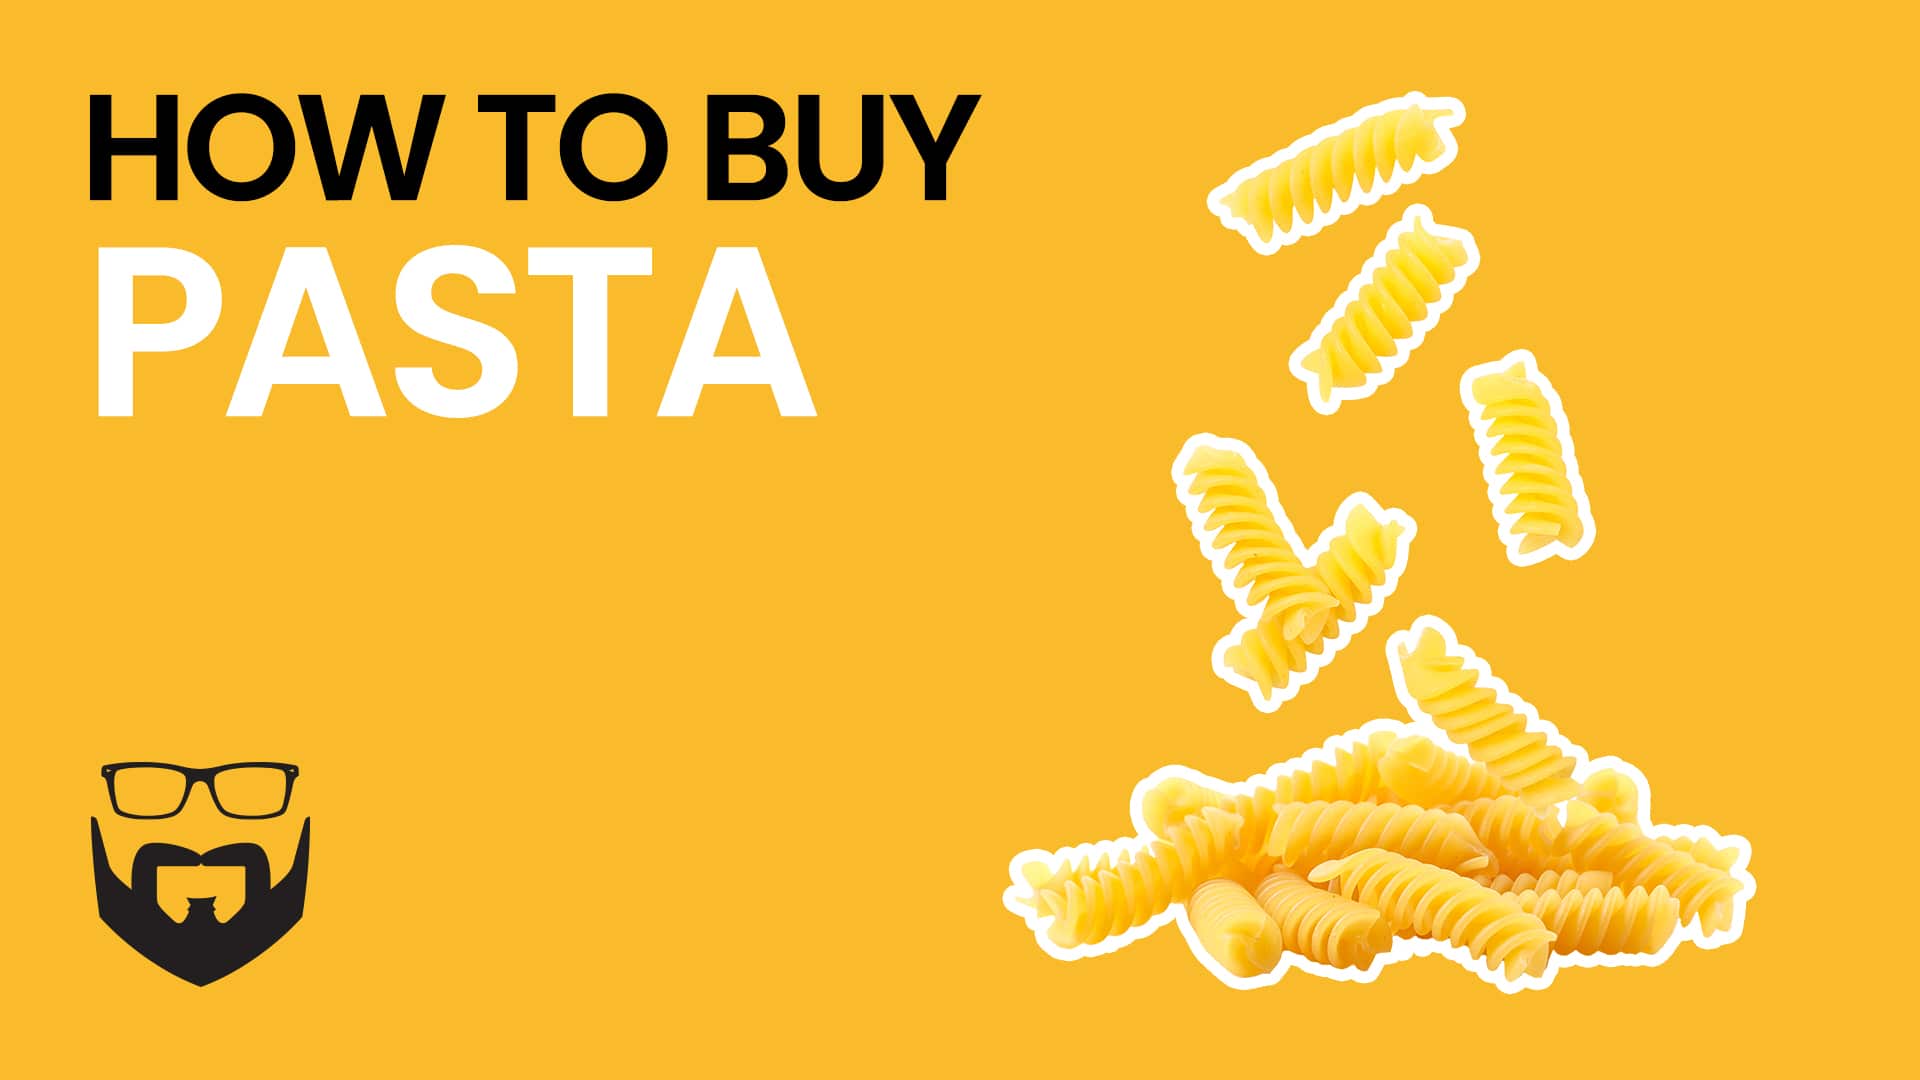 How to Buy Pasta Video - Yellow